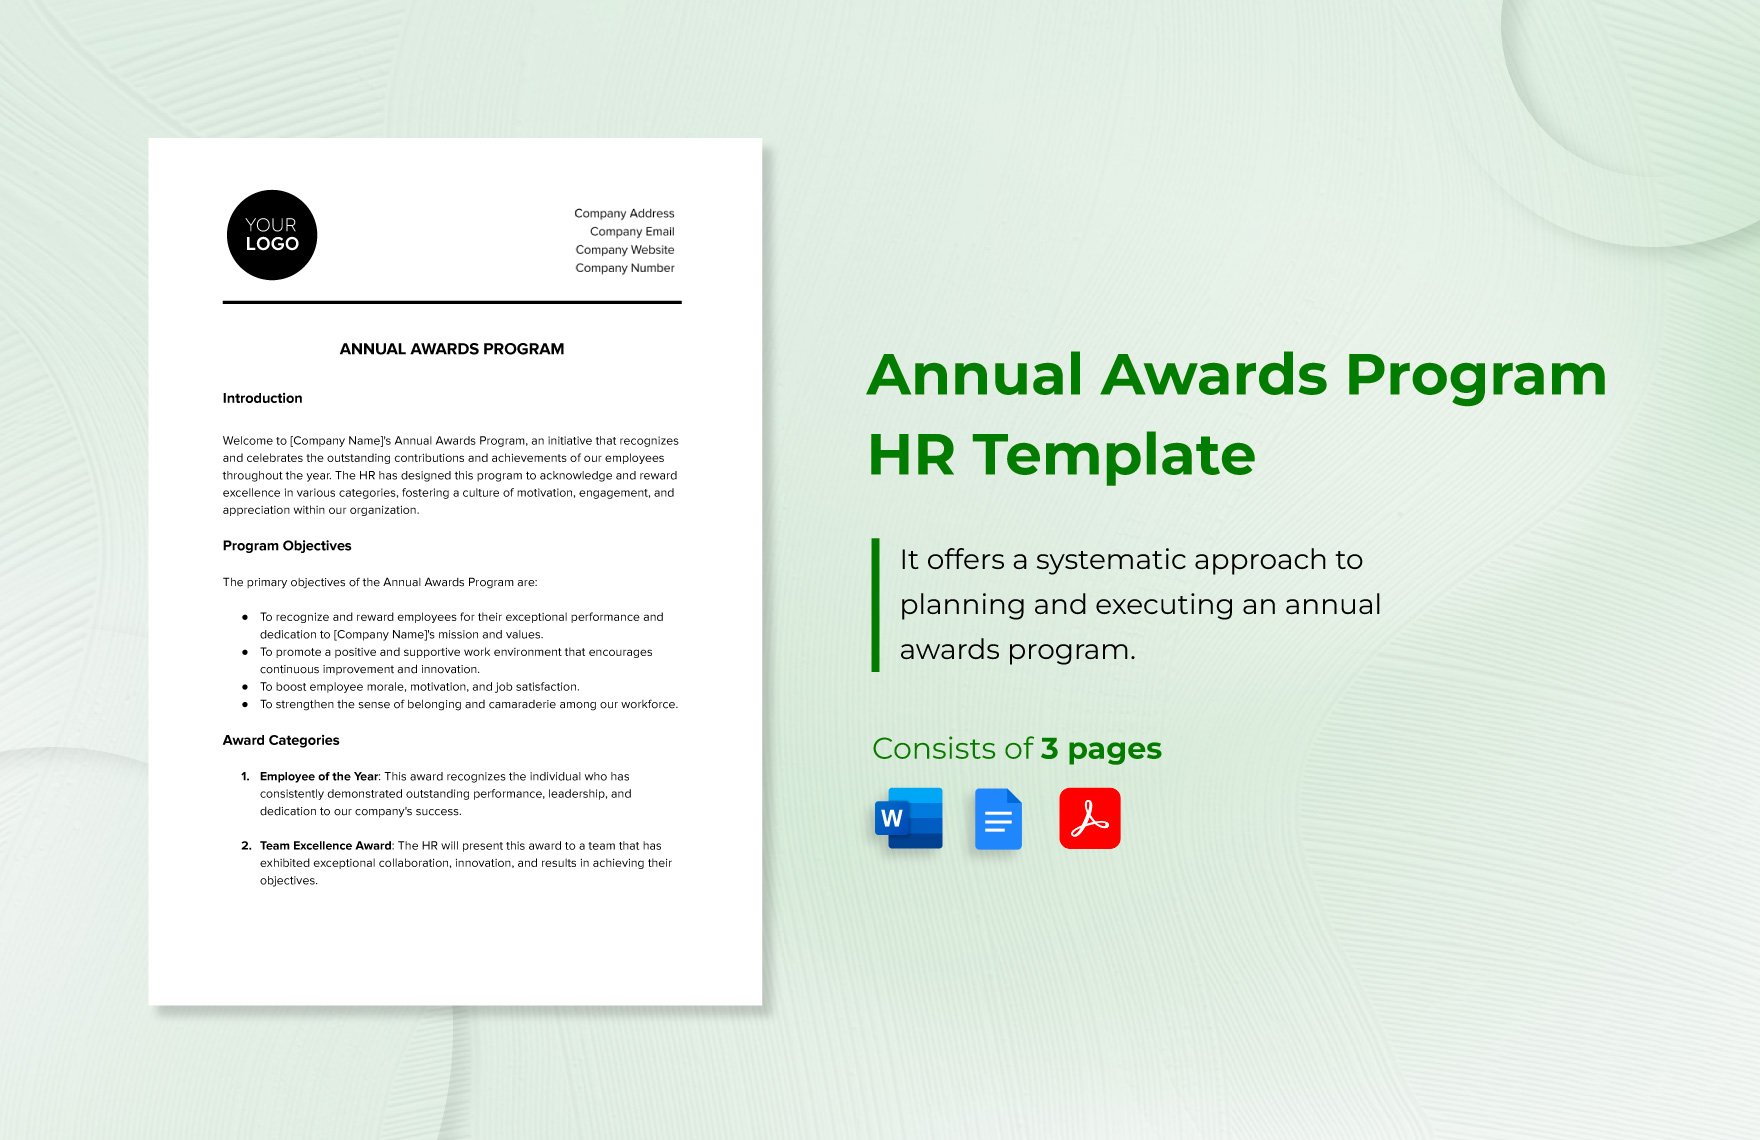 Annual Awards Program HR Template